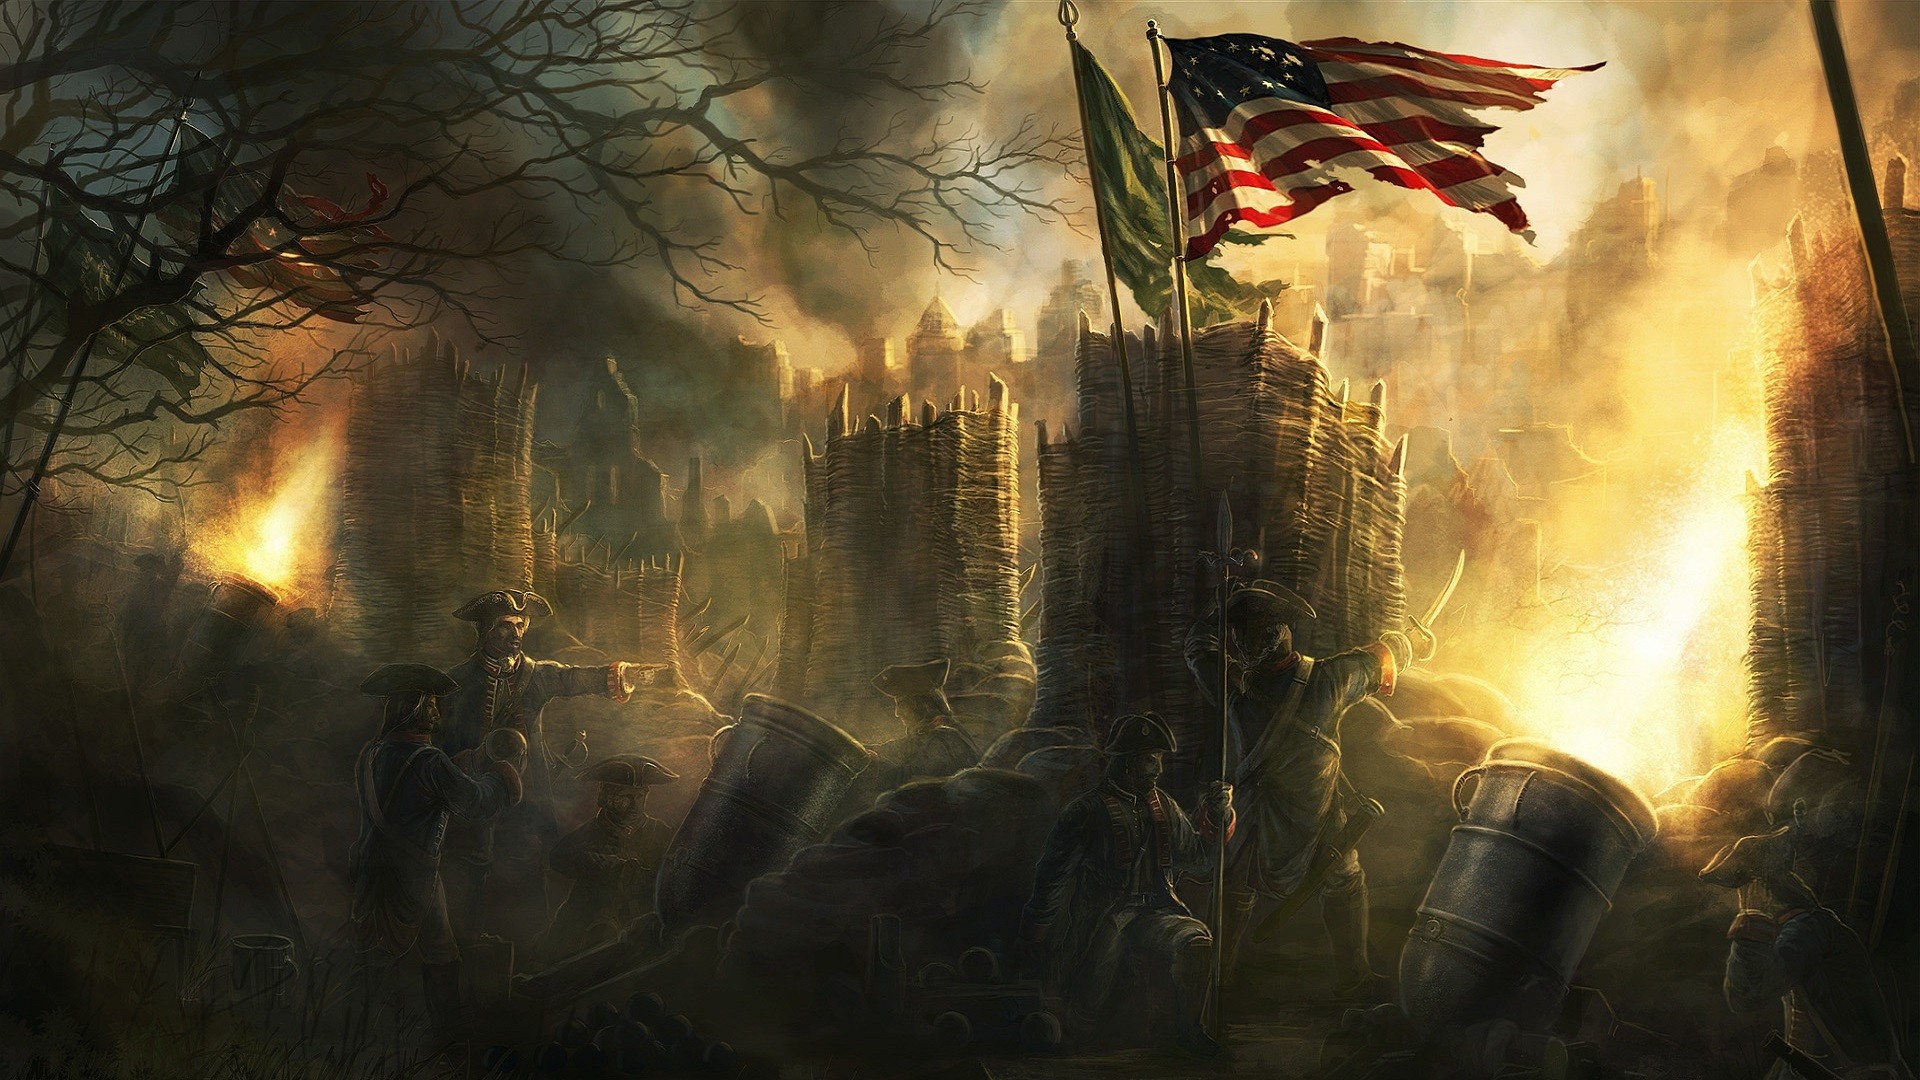 Fantasy Art Digital Art Artwork Trees Forest Plants Dark Military Soldier USA War Lights Flag Empire 1920x1080